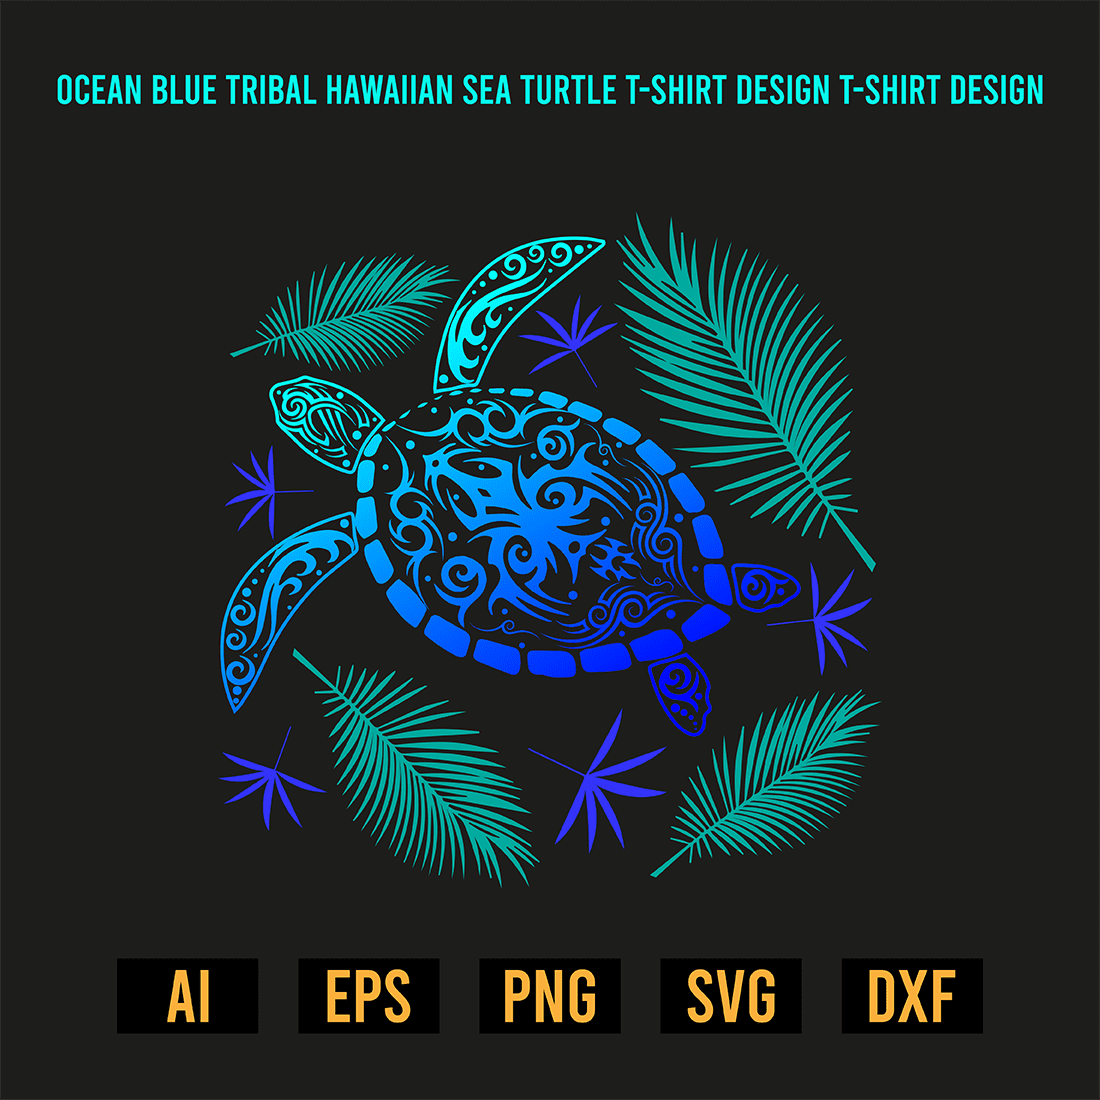 Ocean Blue Tribal Hawaiian Sea Turtle T-Shirt Design preview image.